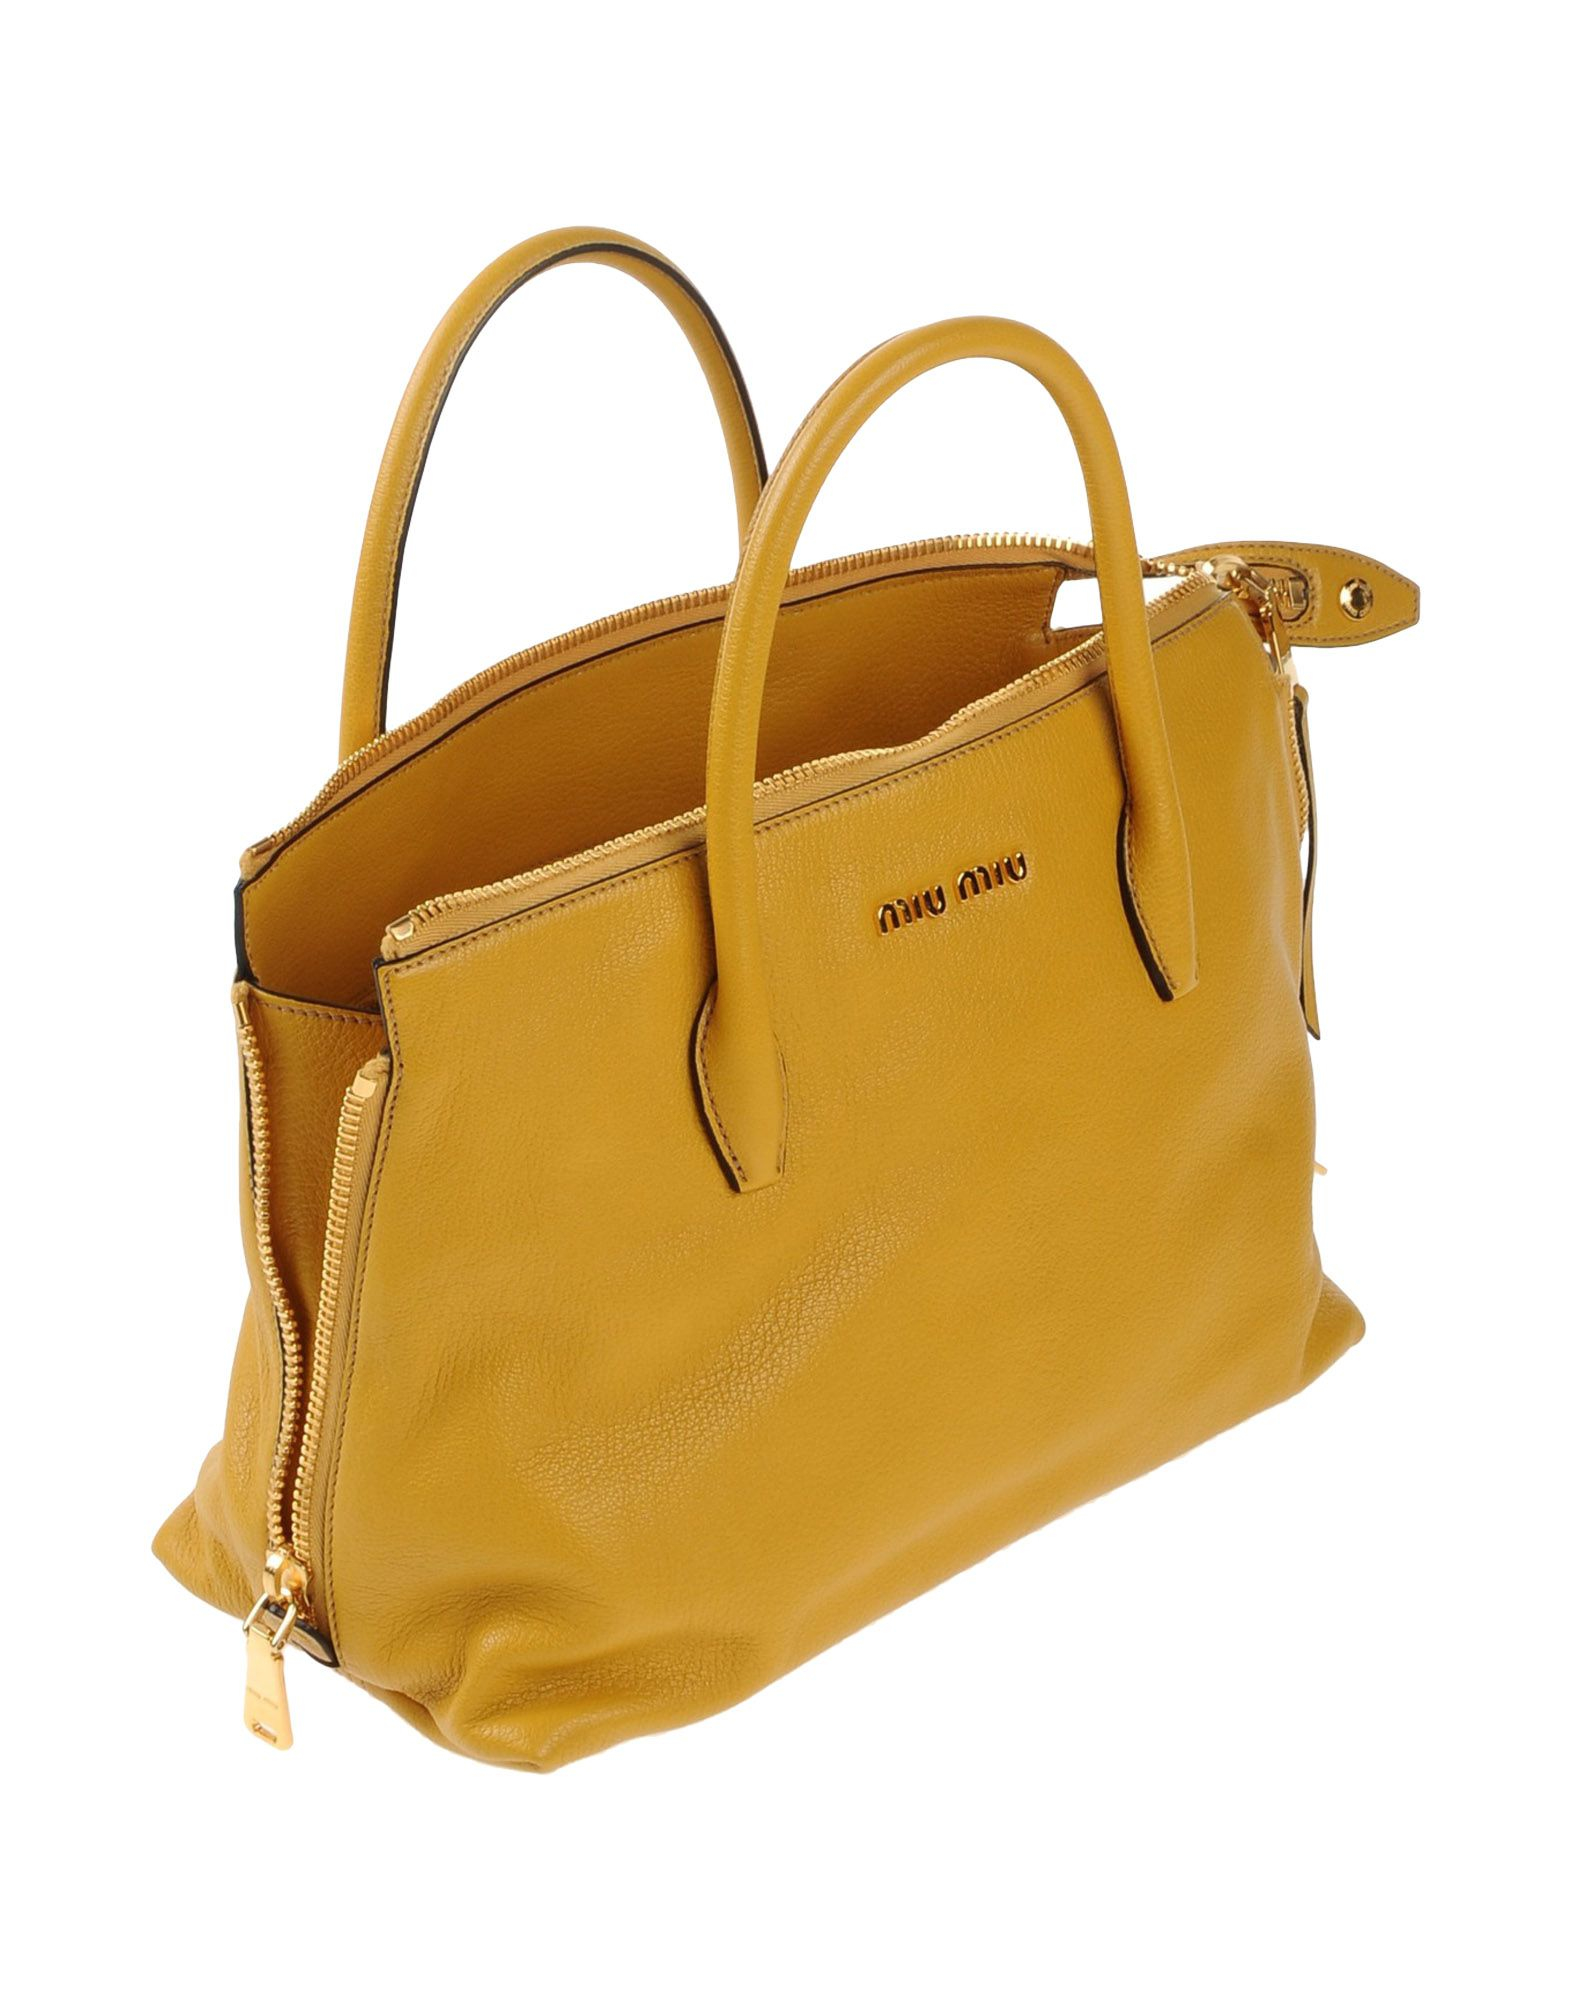 Miu Miu Handbag in Yellow - Lyst